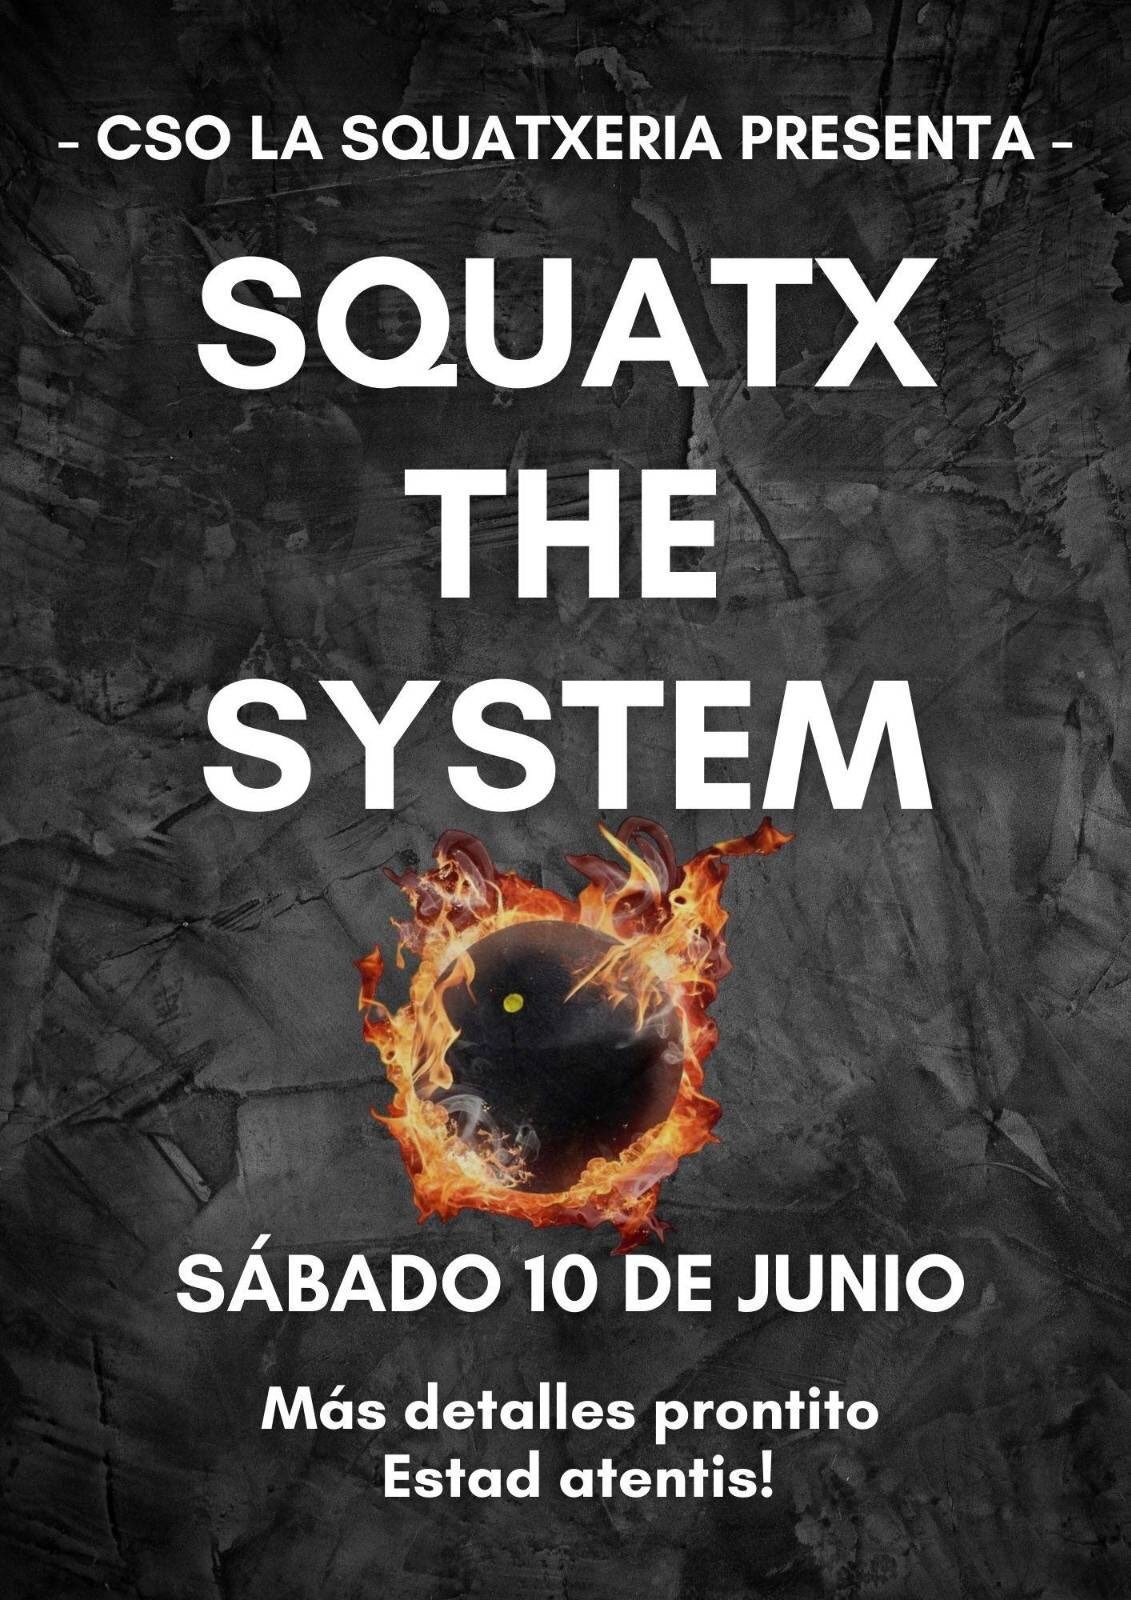 Squash the system